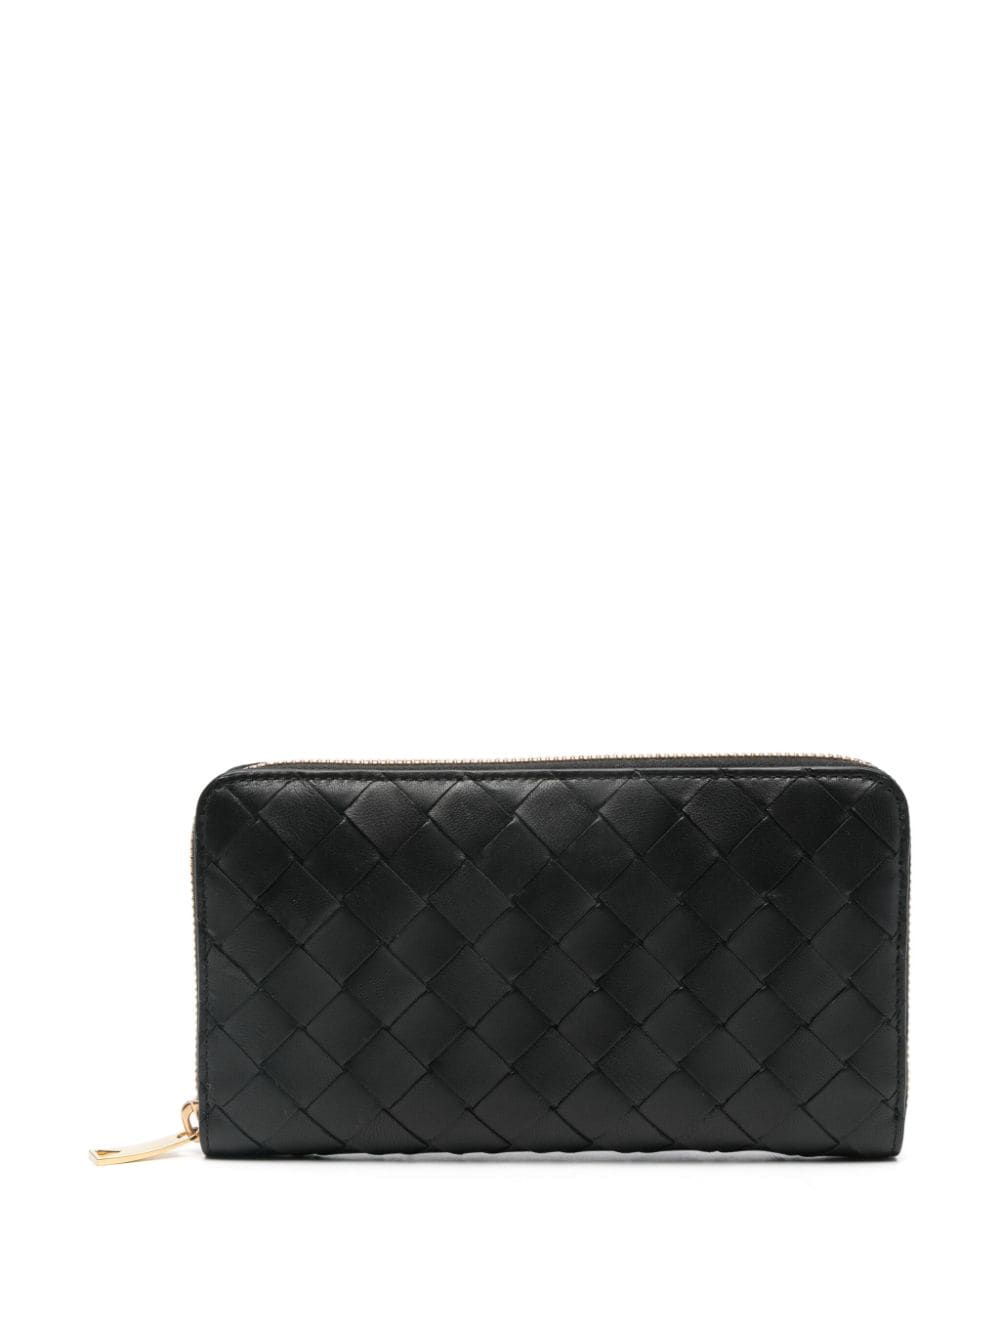 Image 1 of Bottega Veneta Intrecciato leather wallet